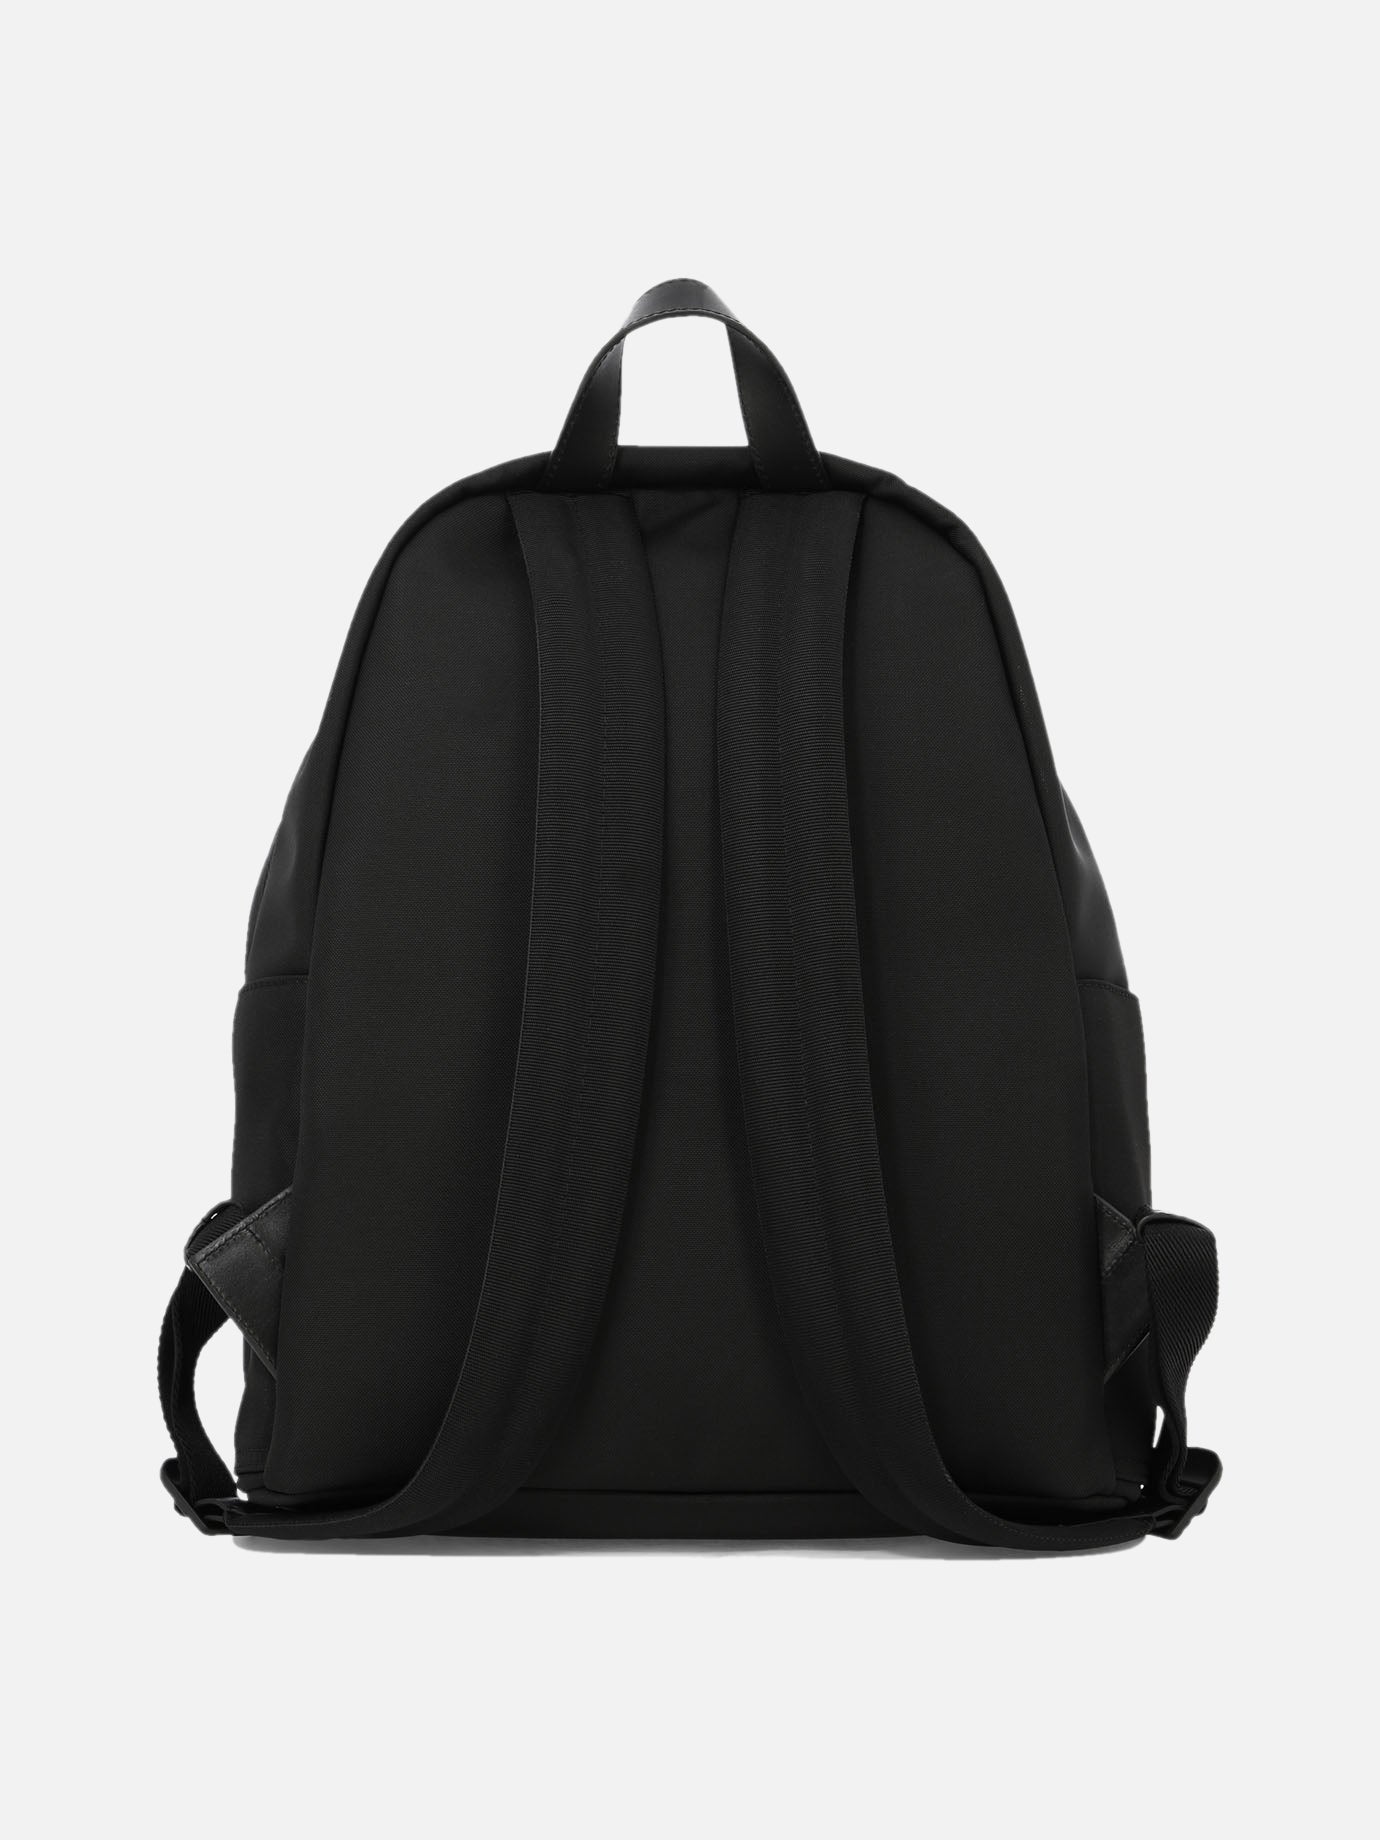 "New Pierrick" backpack